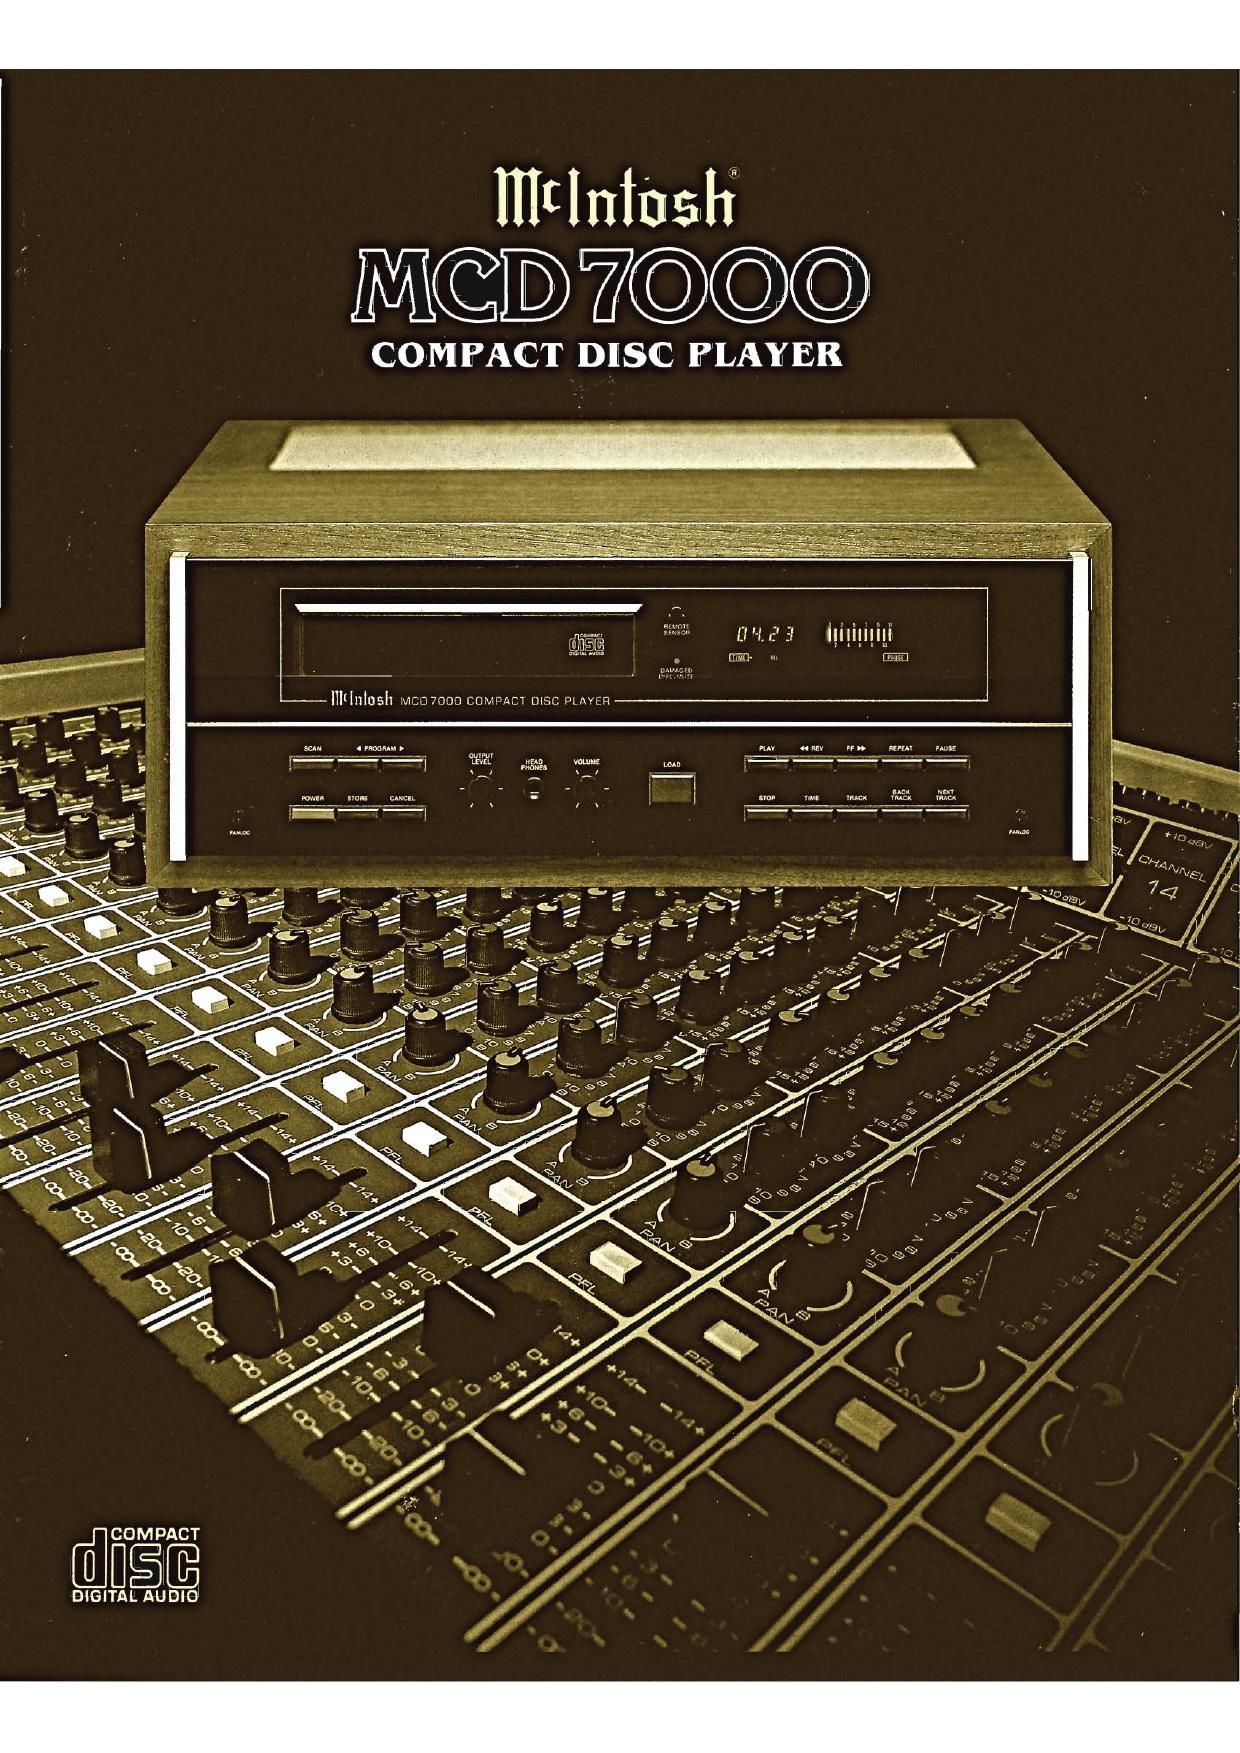 McIntosh MCD 7000 Brochure